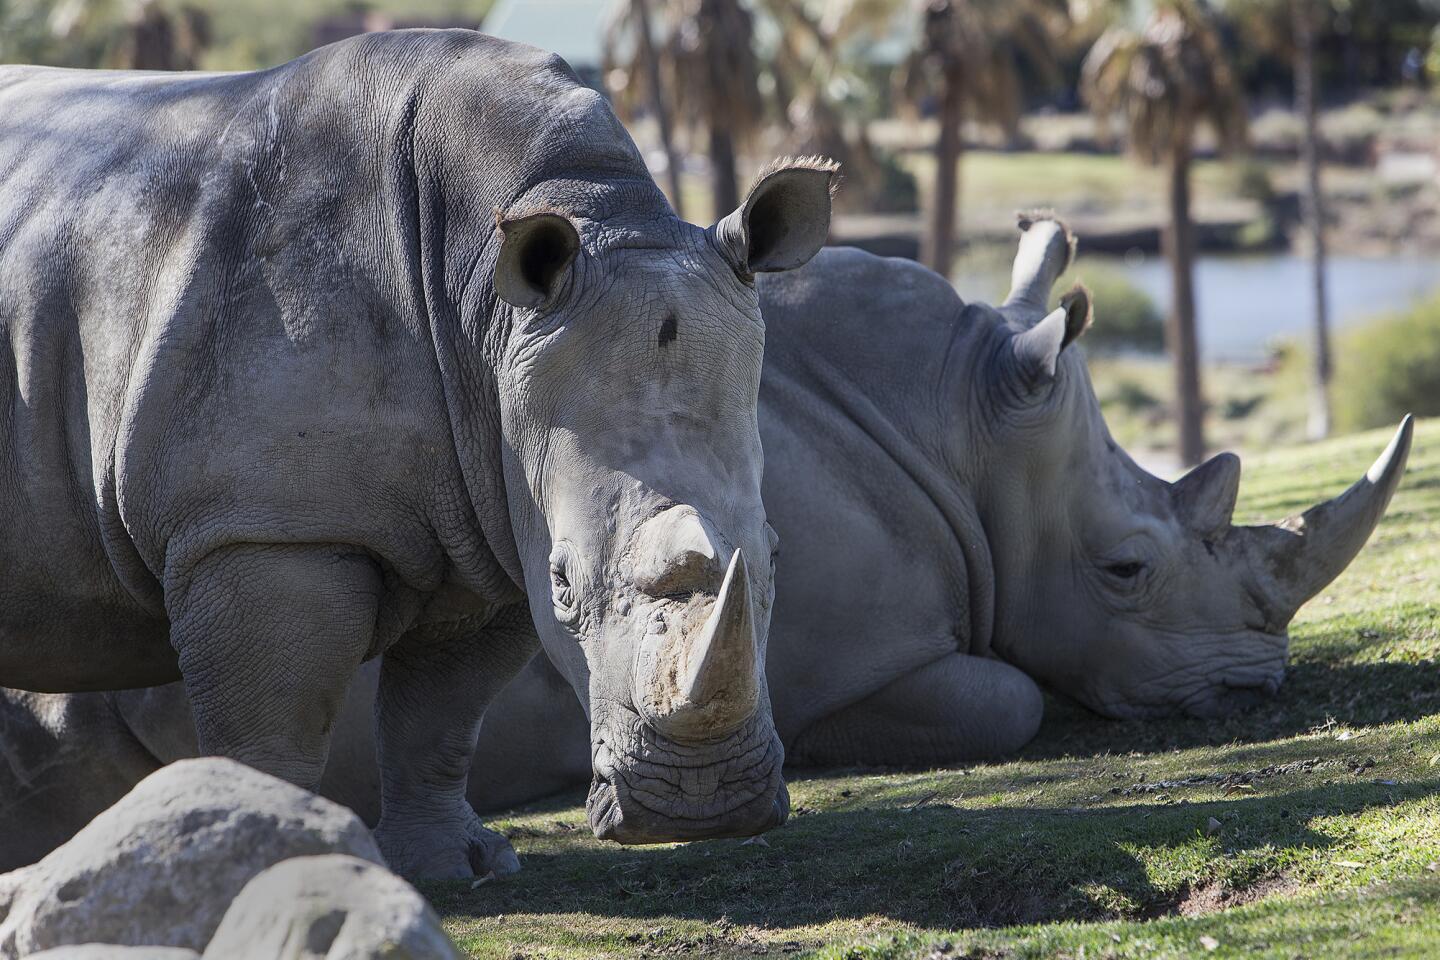 Southern white rhinos